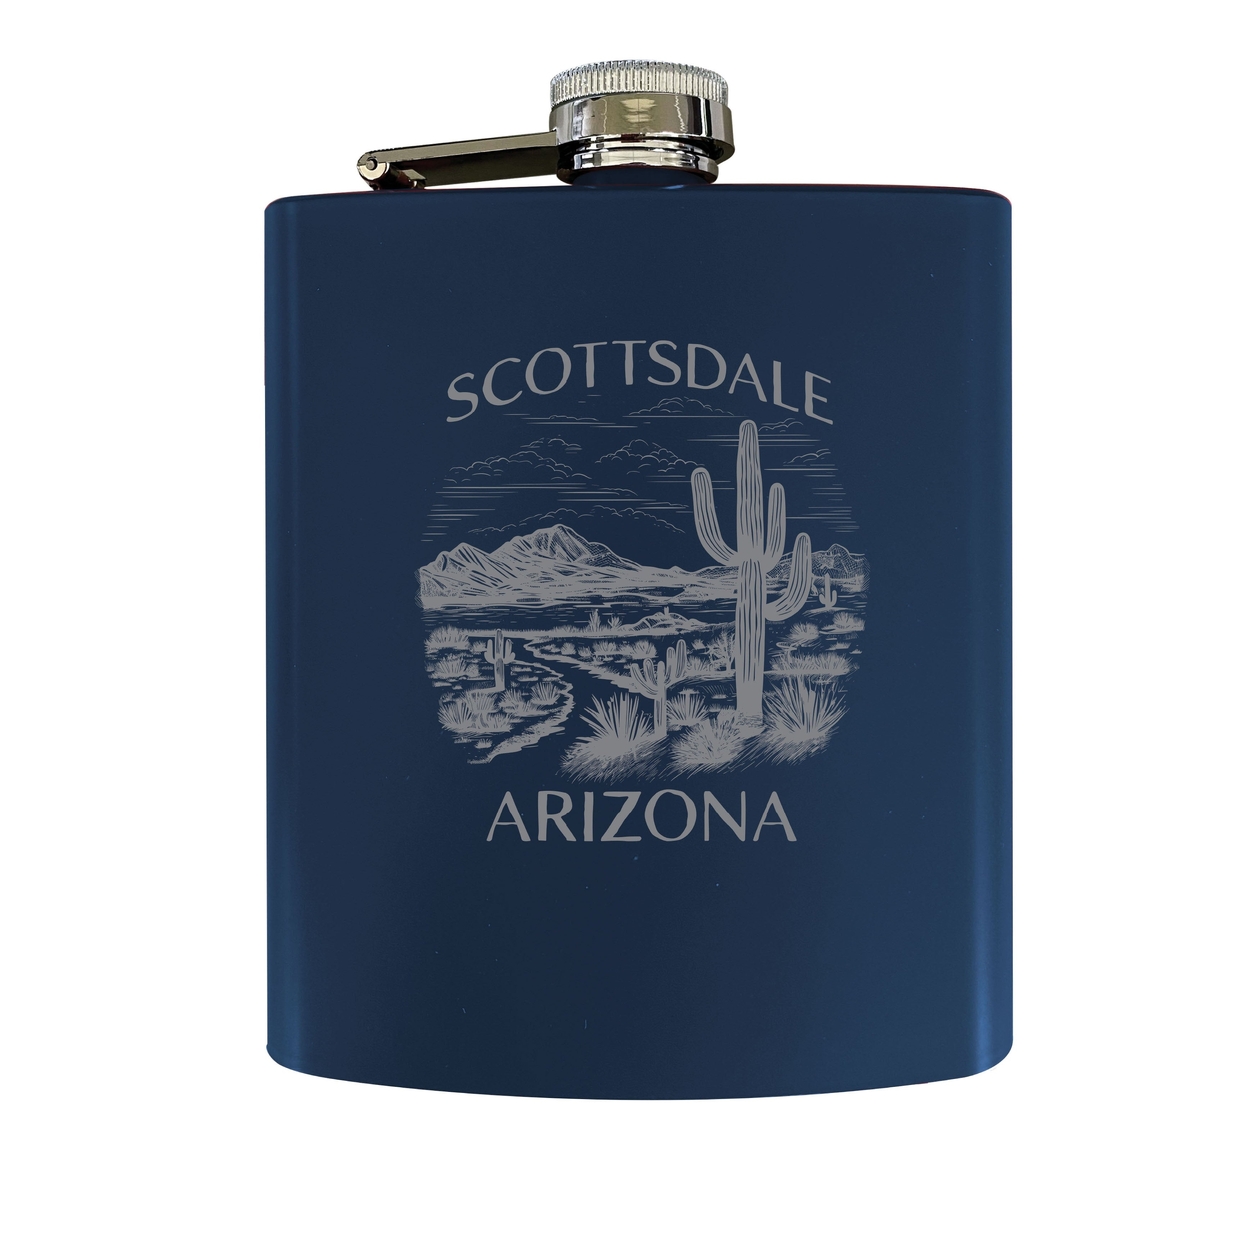 Scottsdale Arizona Souvenir 7 Oz Engraved Steel Flask Matte Finish - Red,,4-Pack